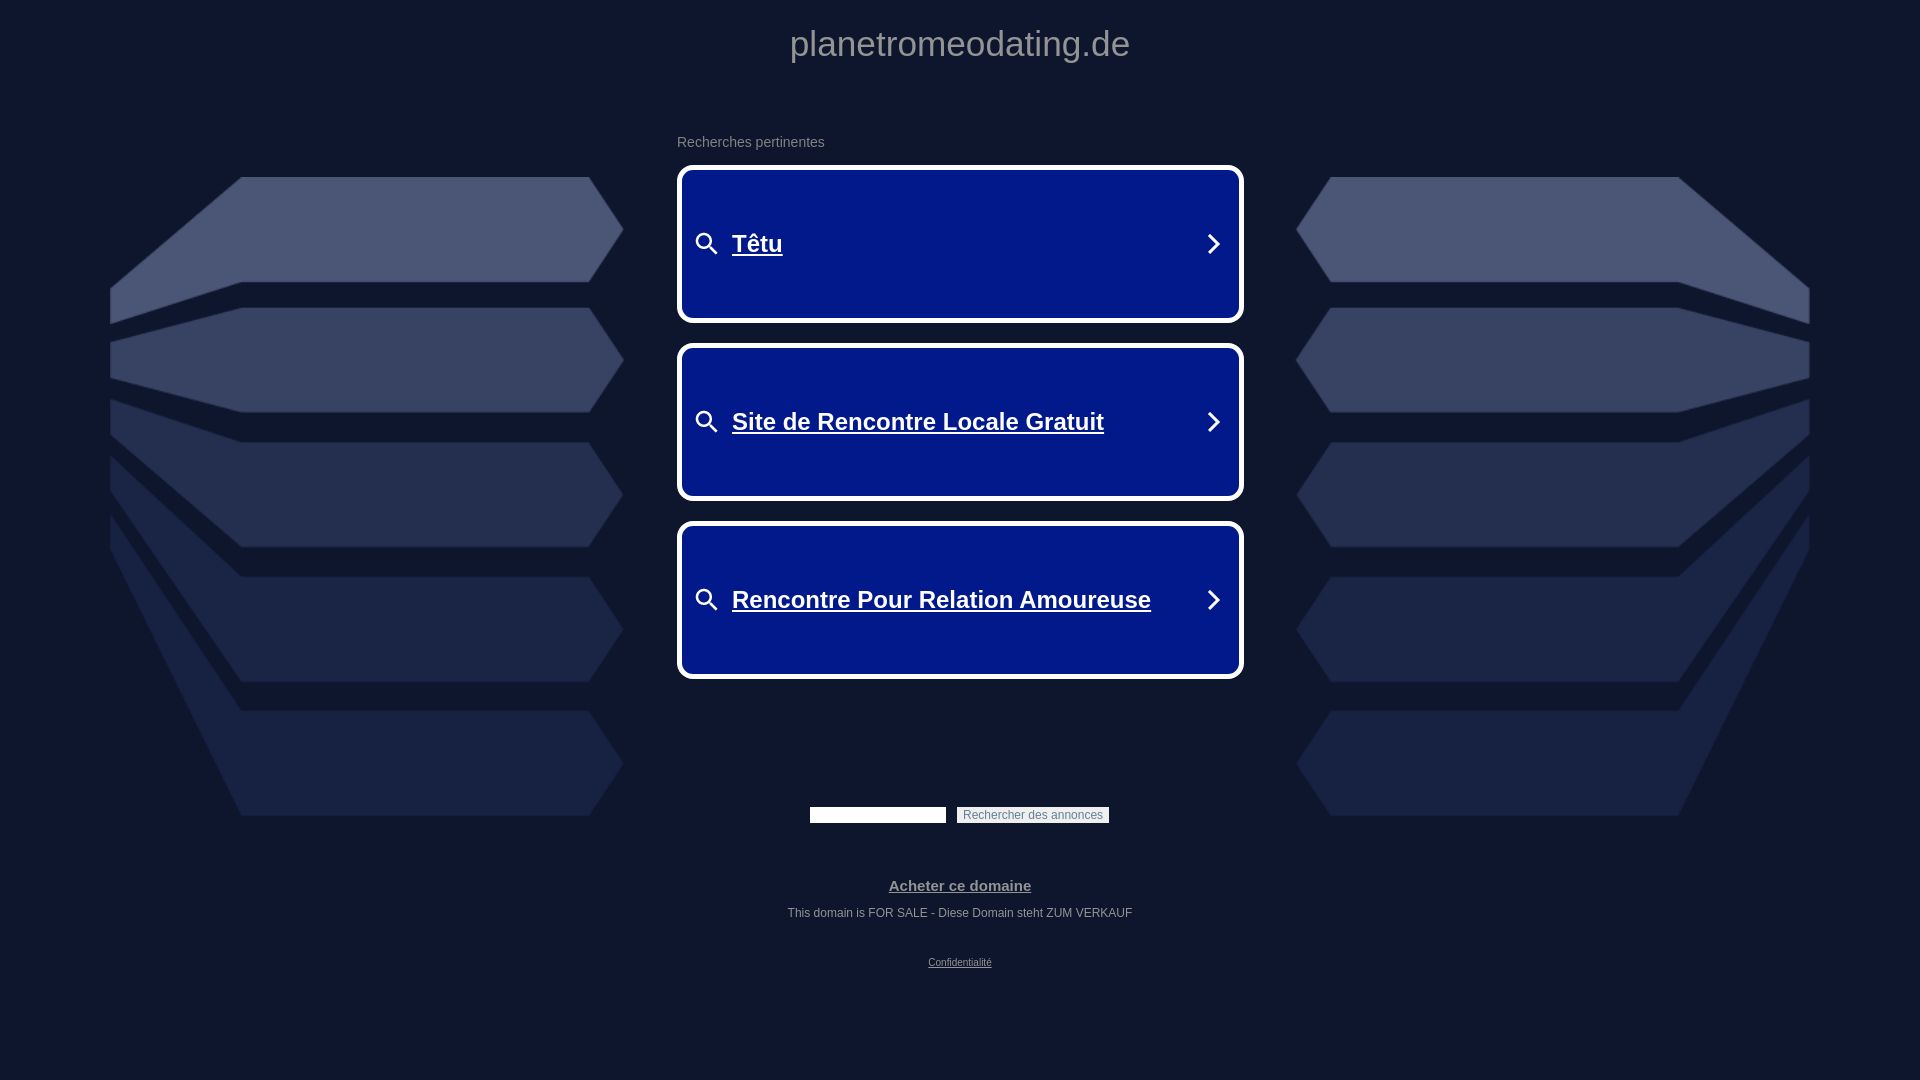 Website status planetromeodating.de is   ONLINE